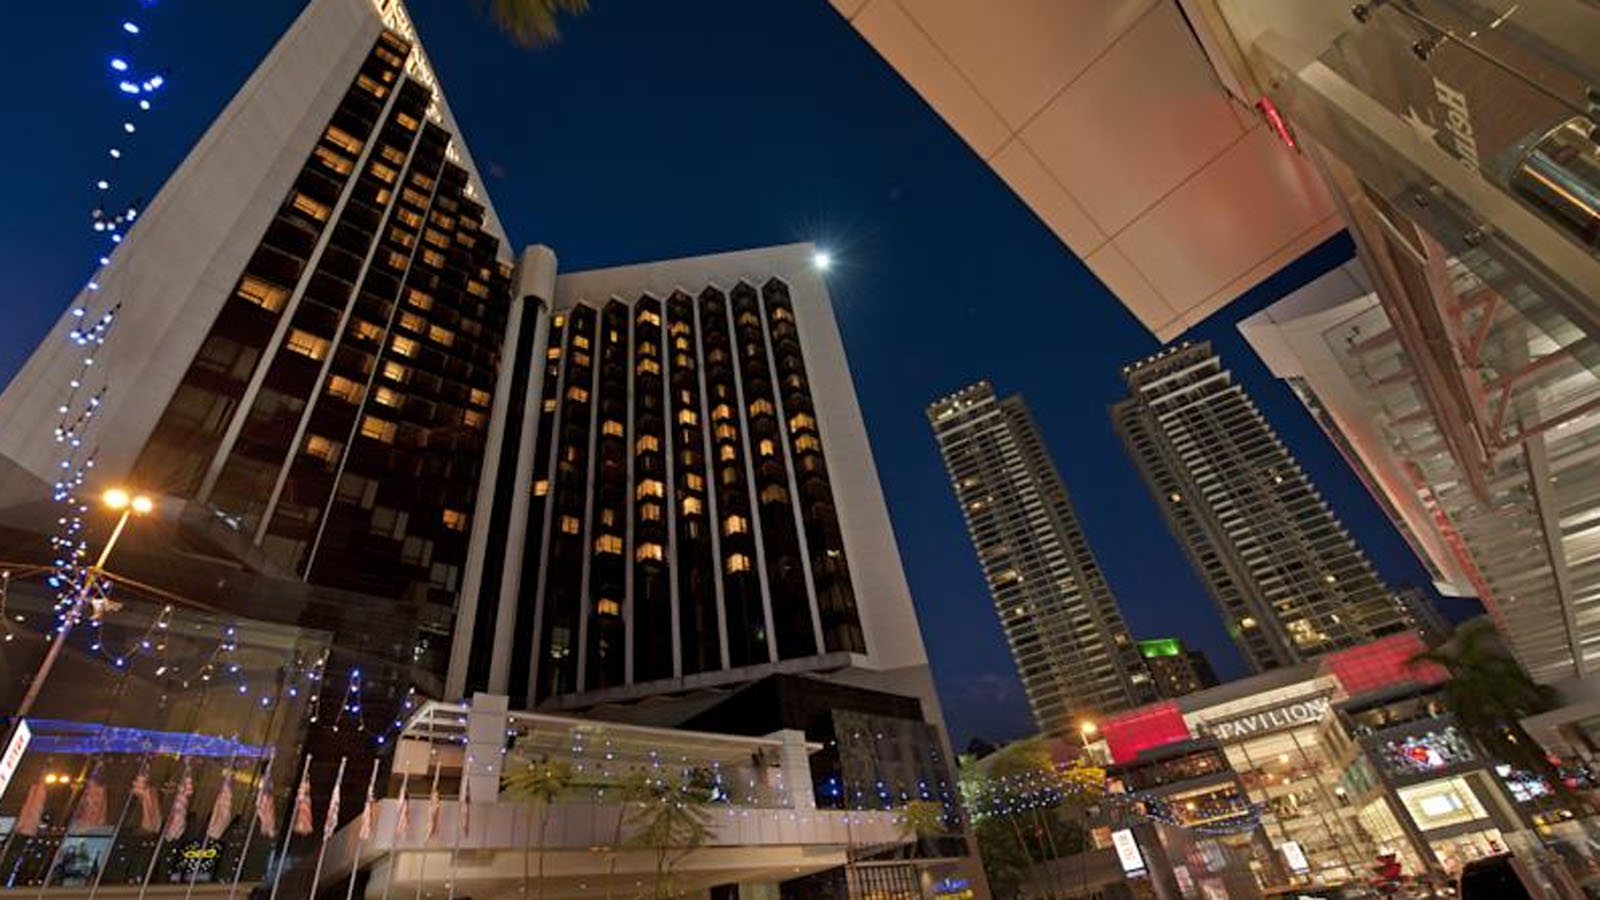 تور مالزي هتل گرند میلنیوم- آژانس مسافرتي و هواپيمايي آفتاب ساحل آبي